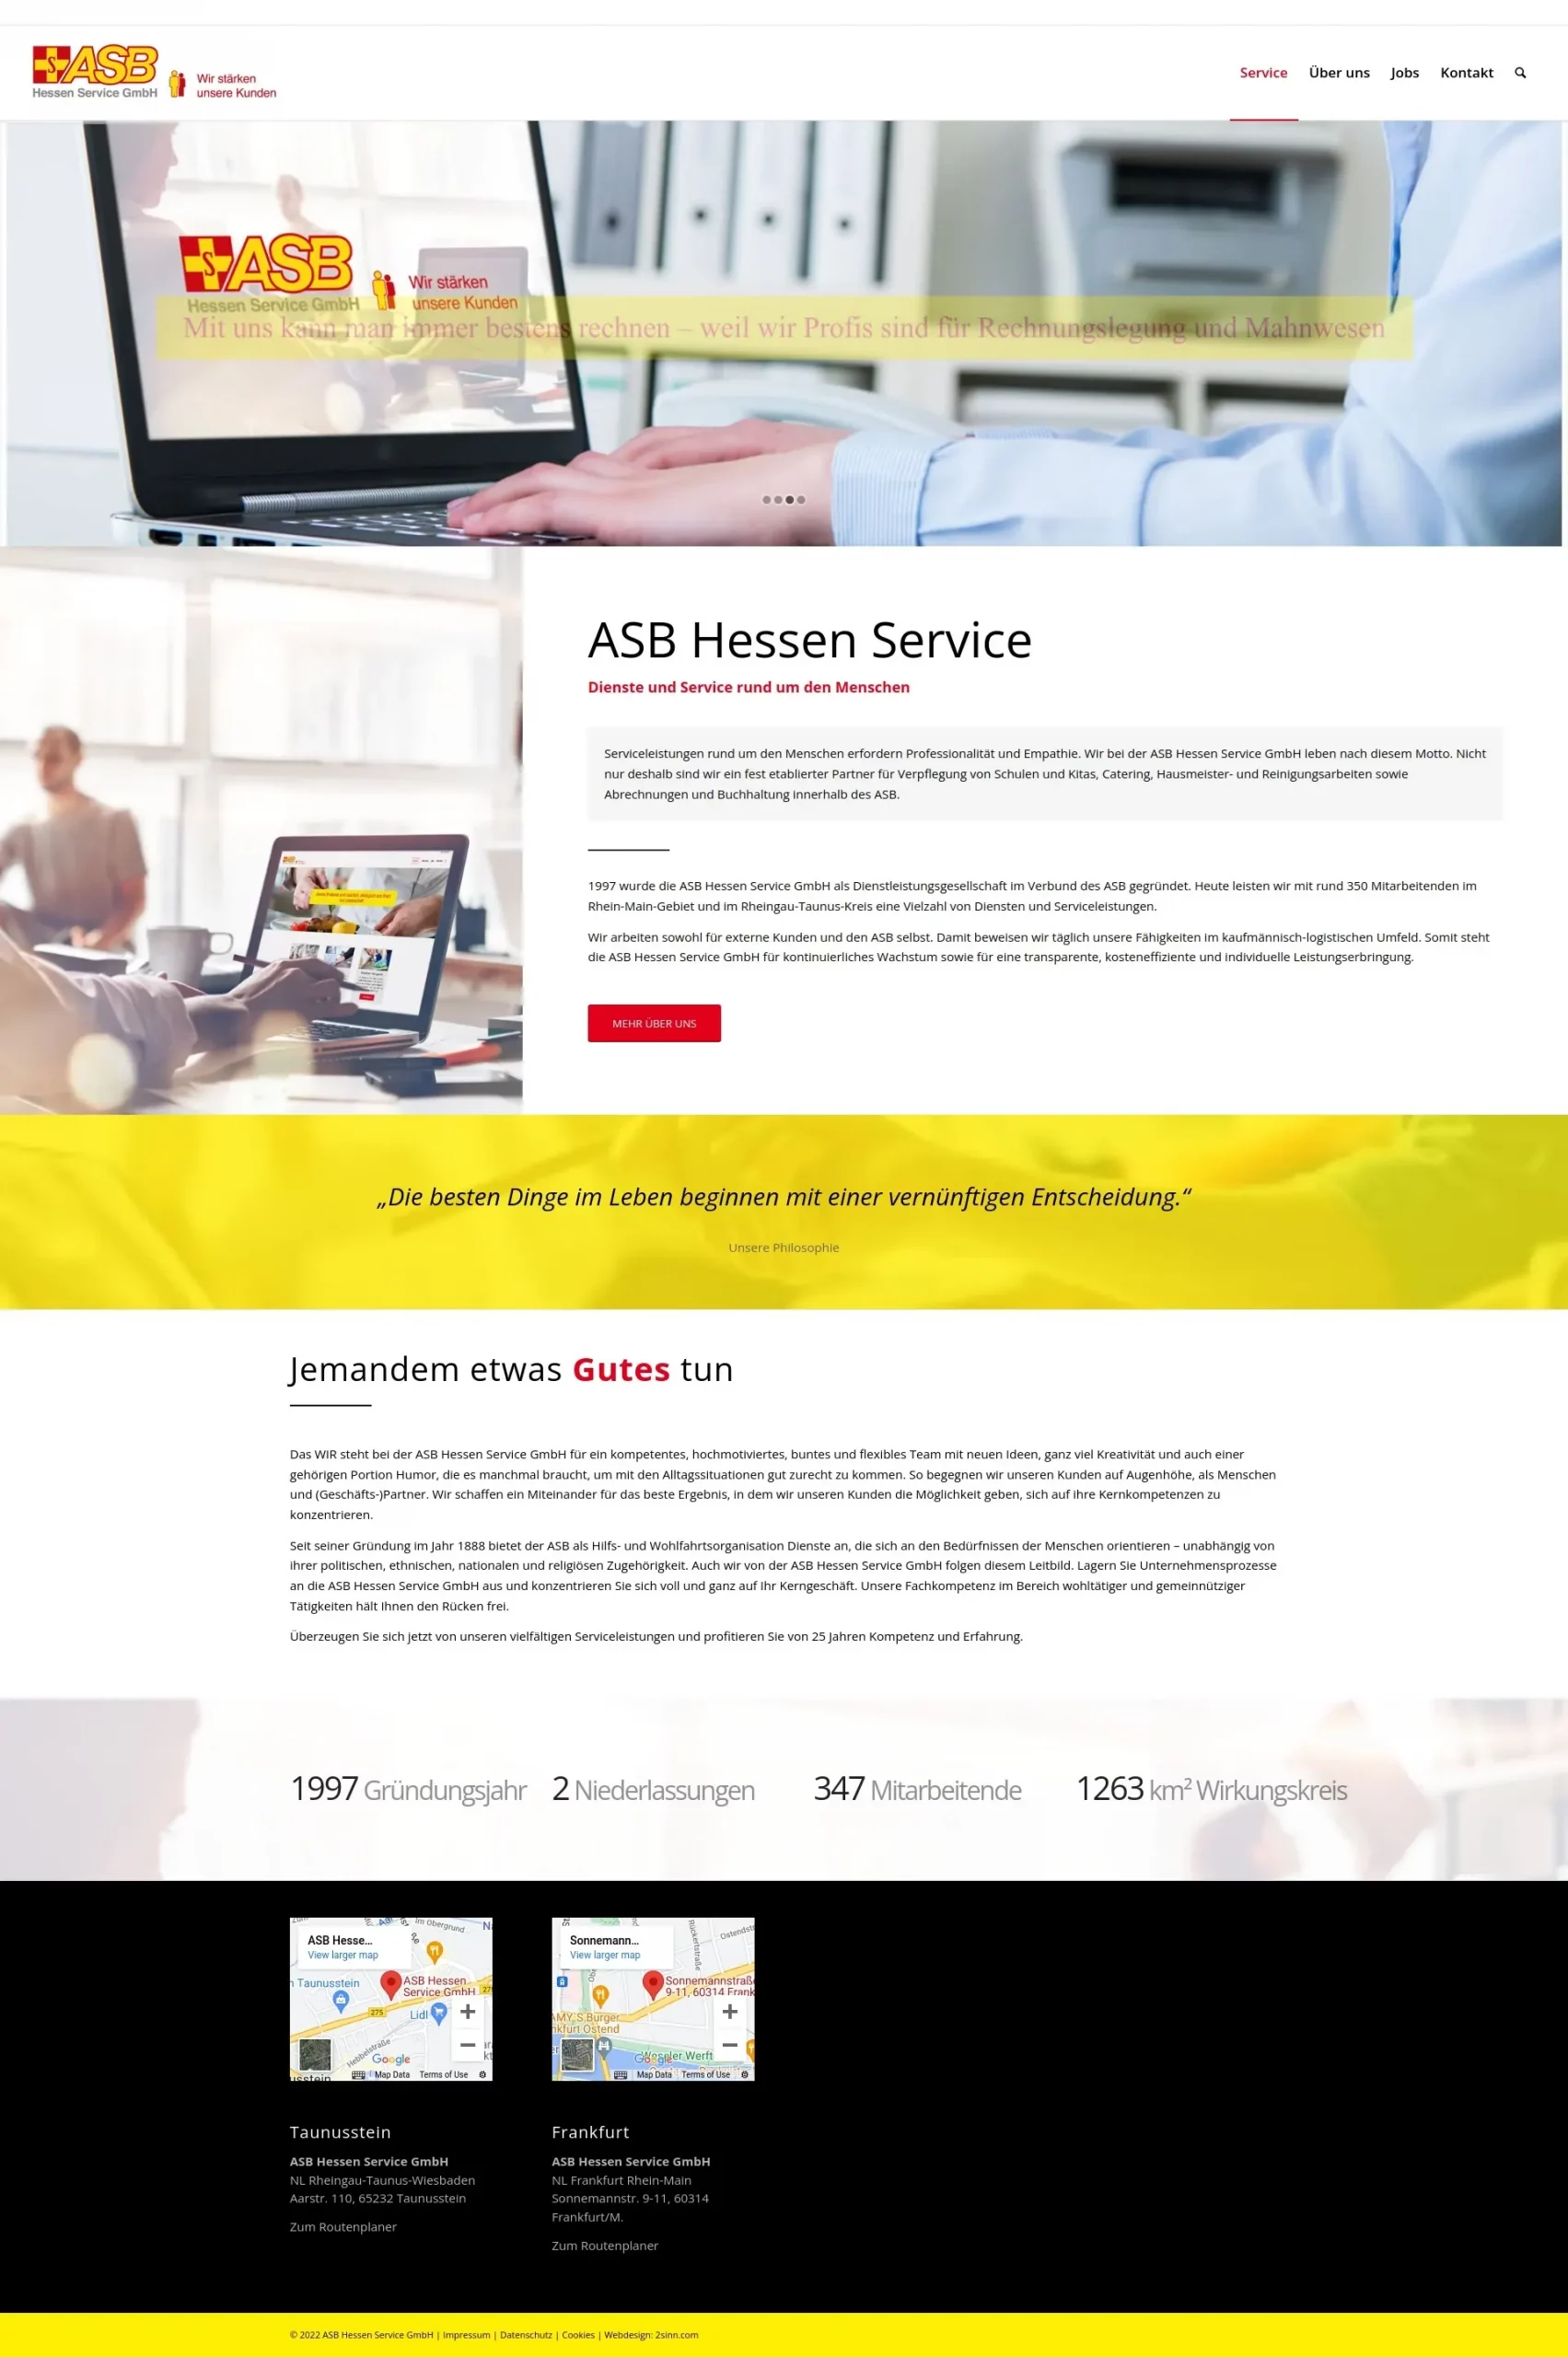 2s-website-asb-service-cmp